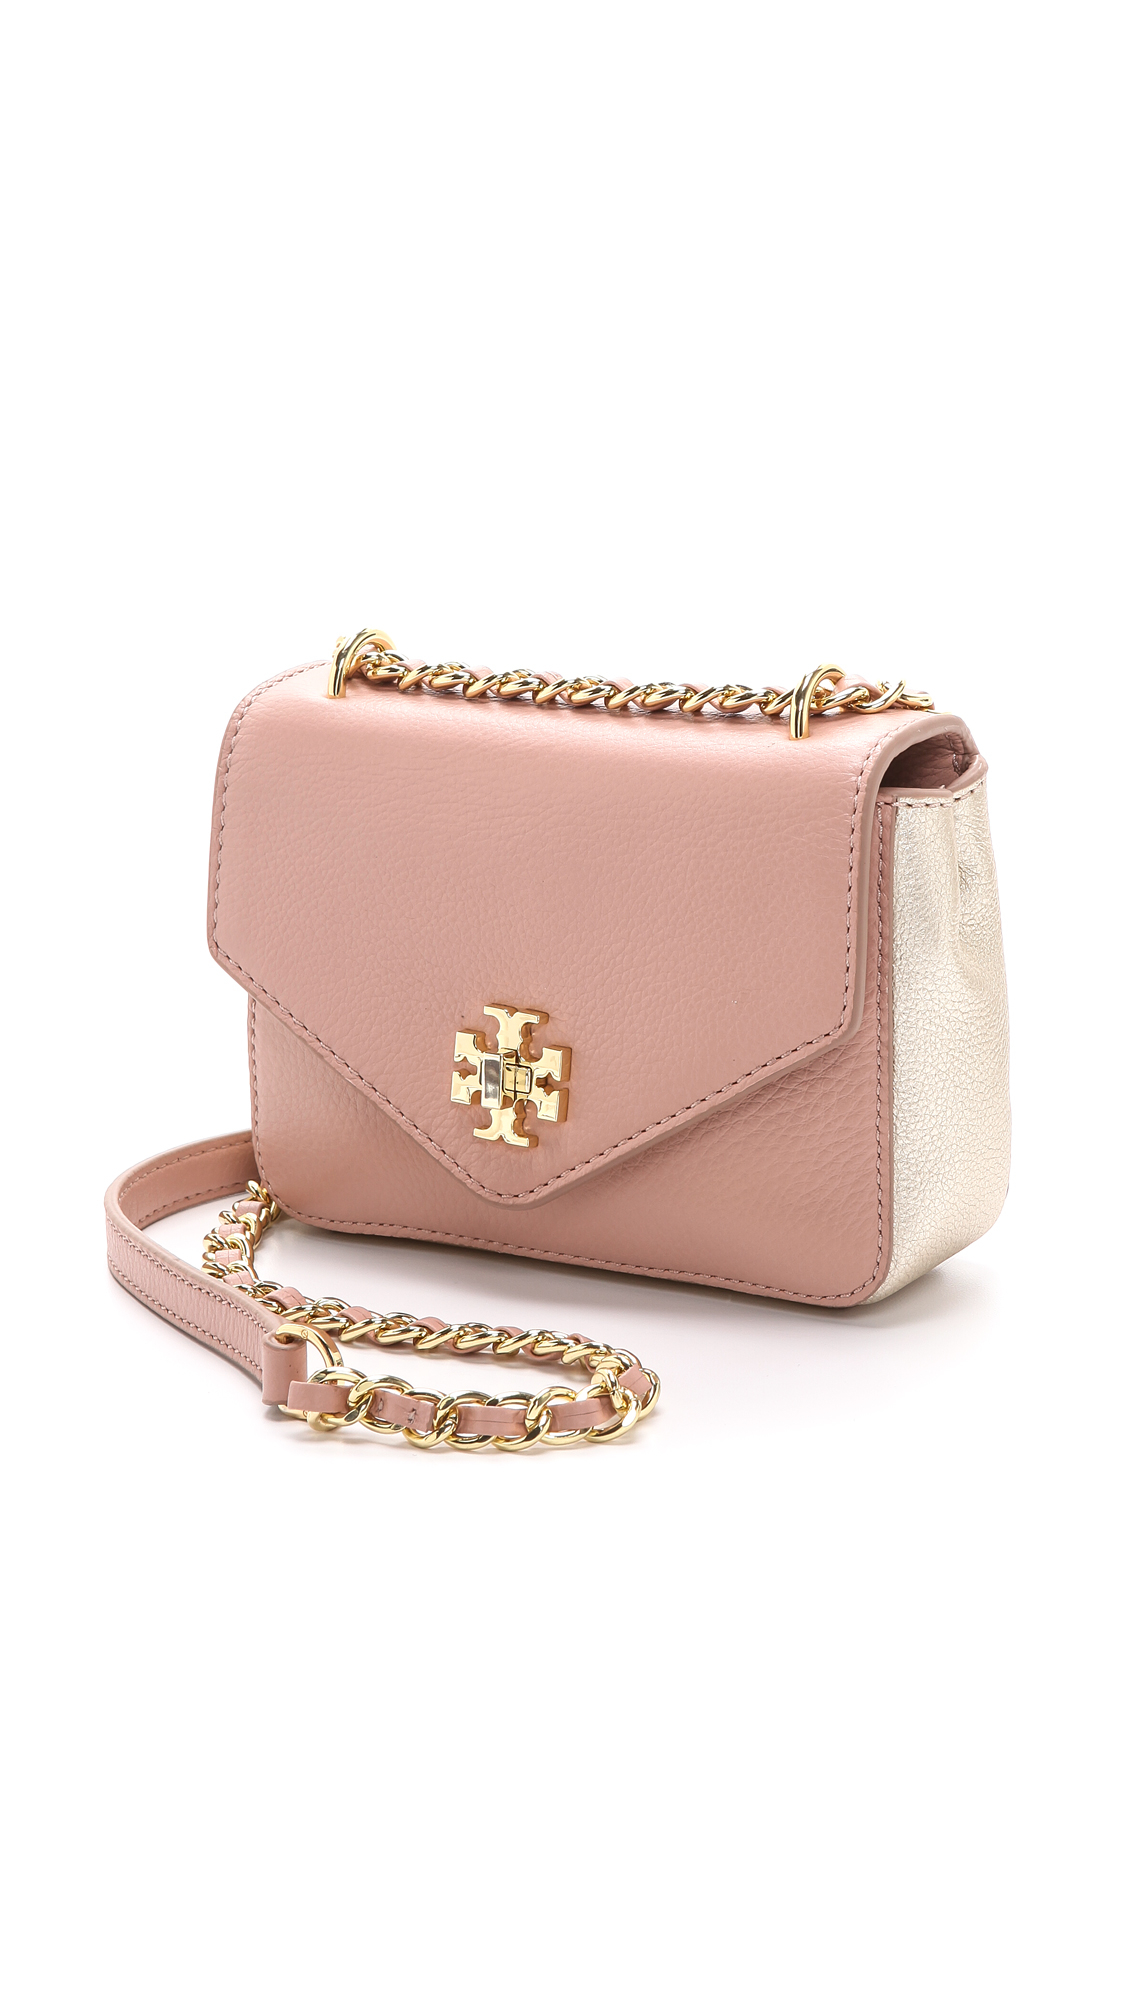 Tory Burch Kira Mini Chain Bag - Indian Rose/Champagne Gold in Pink | Lyst